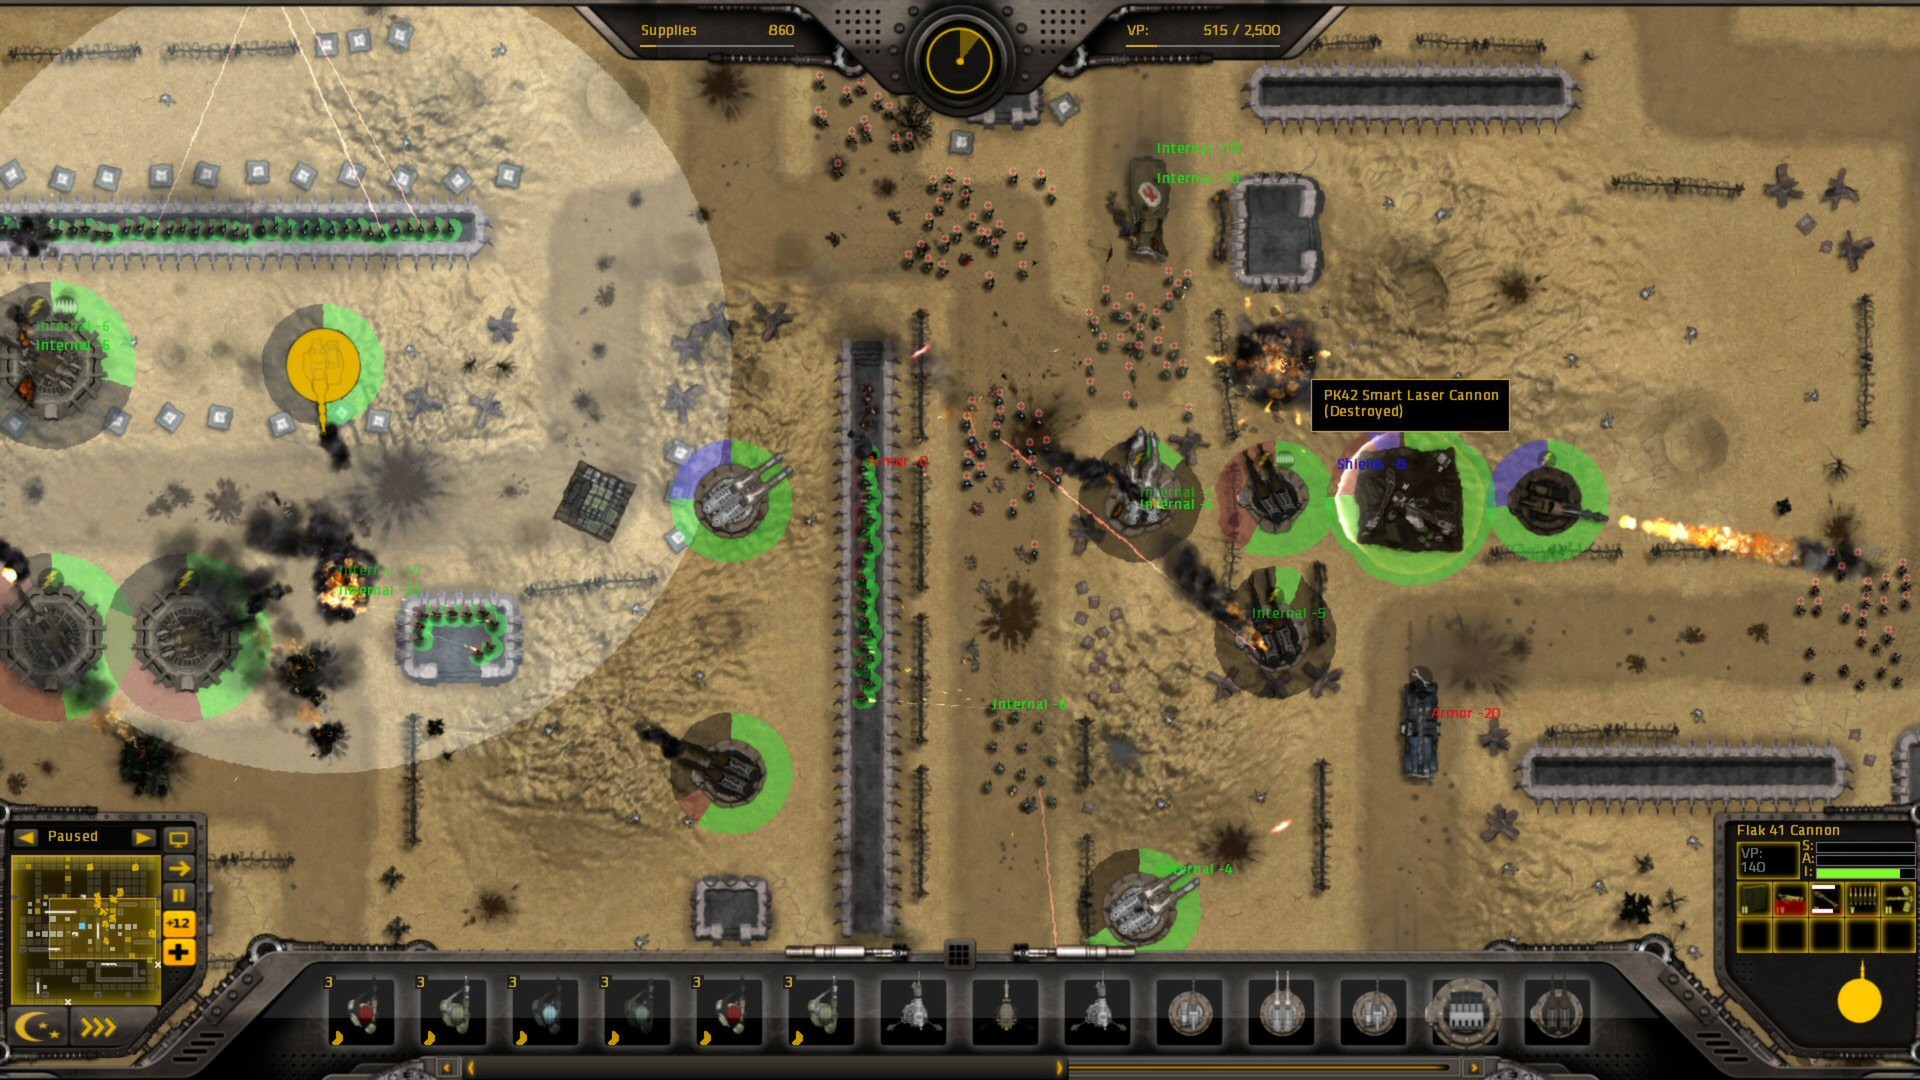 steam gratuitous tank battles multiplayer key instructions